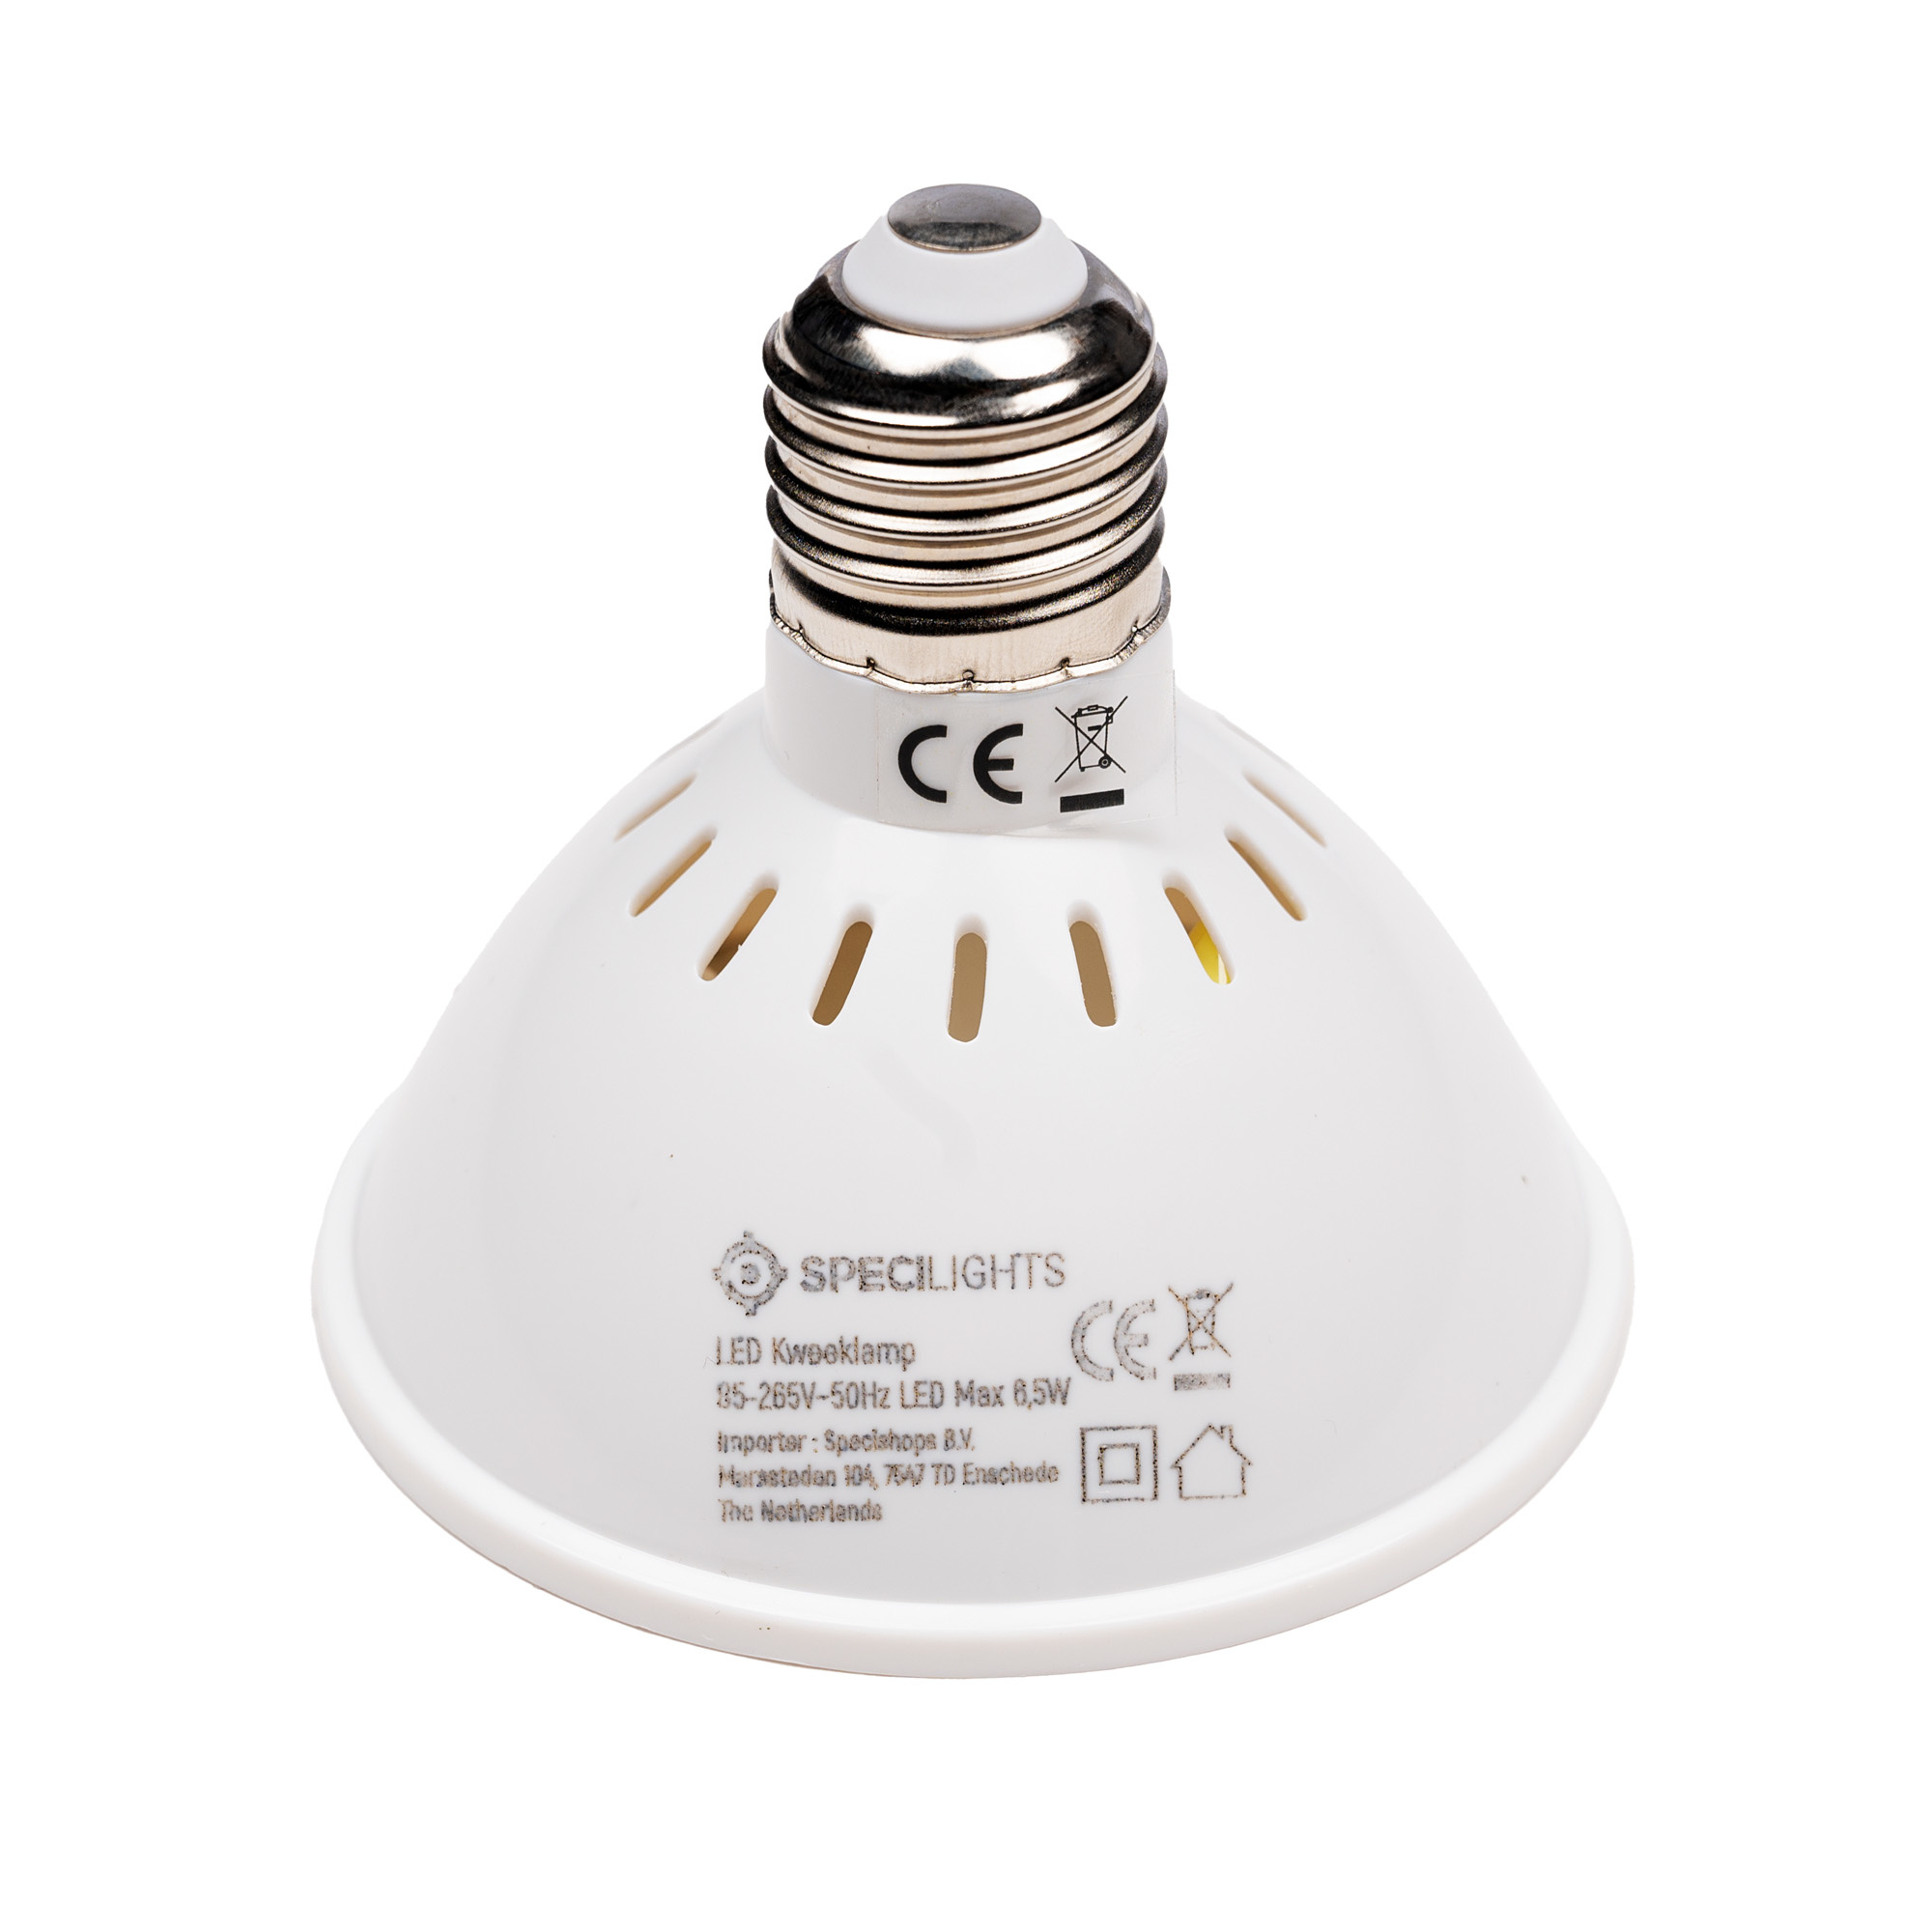 Led Kweeklamp Groeilamp met E27 fitting - LEDs - Full Spectrum lamp met grote fitting - LedlampshopXL